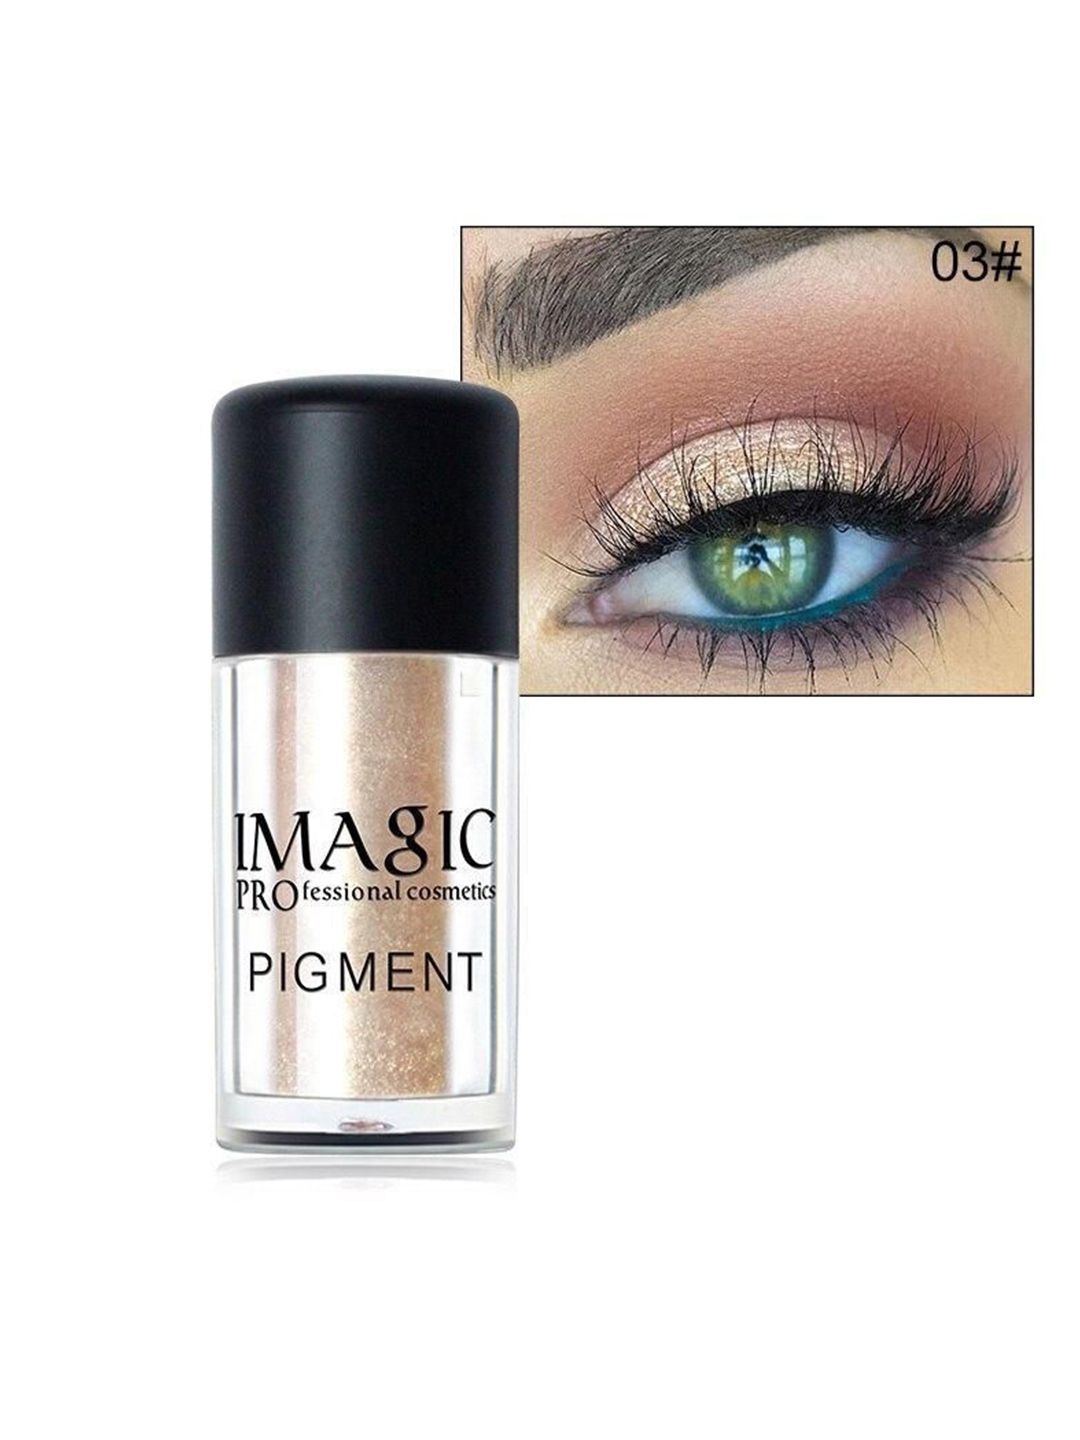 IMAGIC PROfessional cosmetics Pigment Loose Powder Eyeshadow - Glisten 2g Price in India